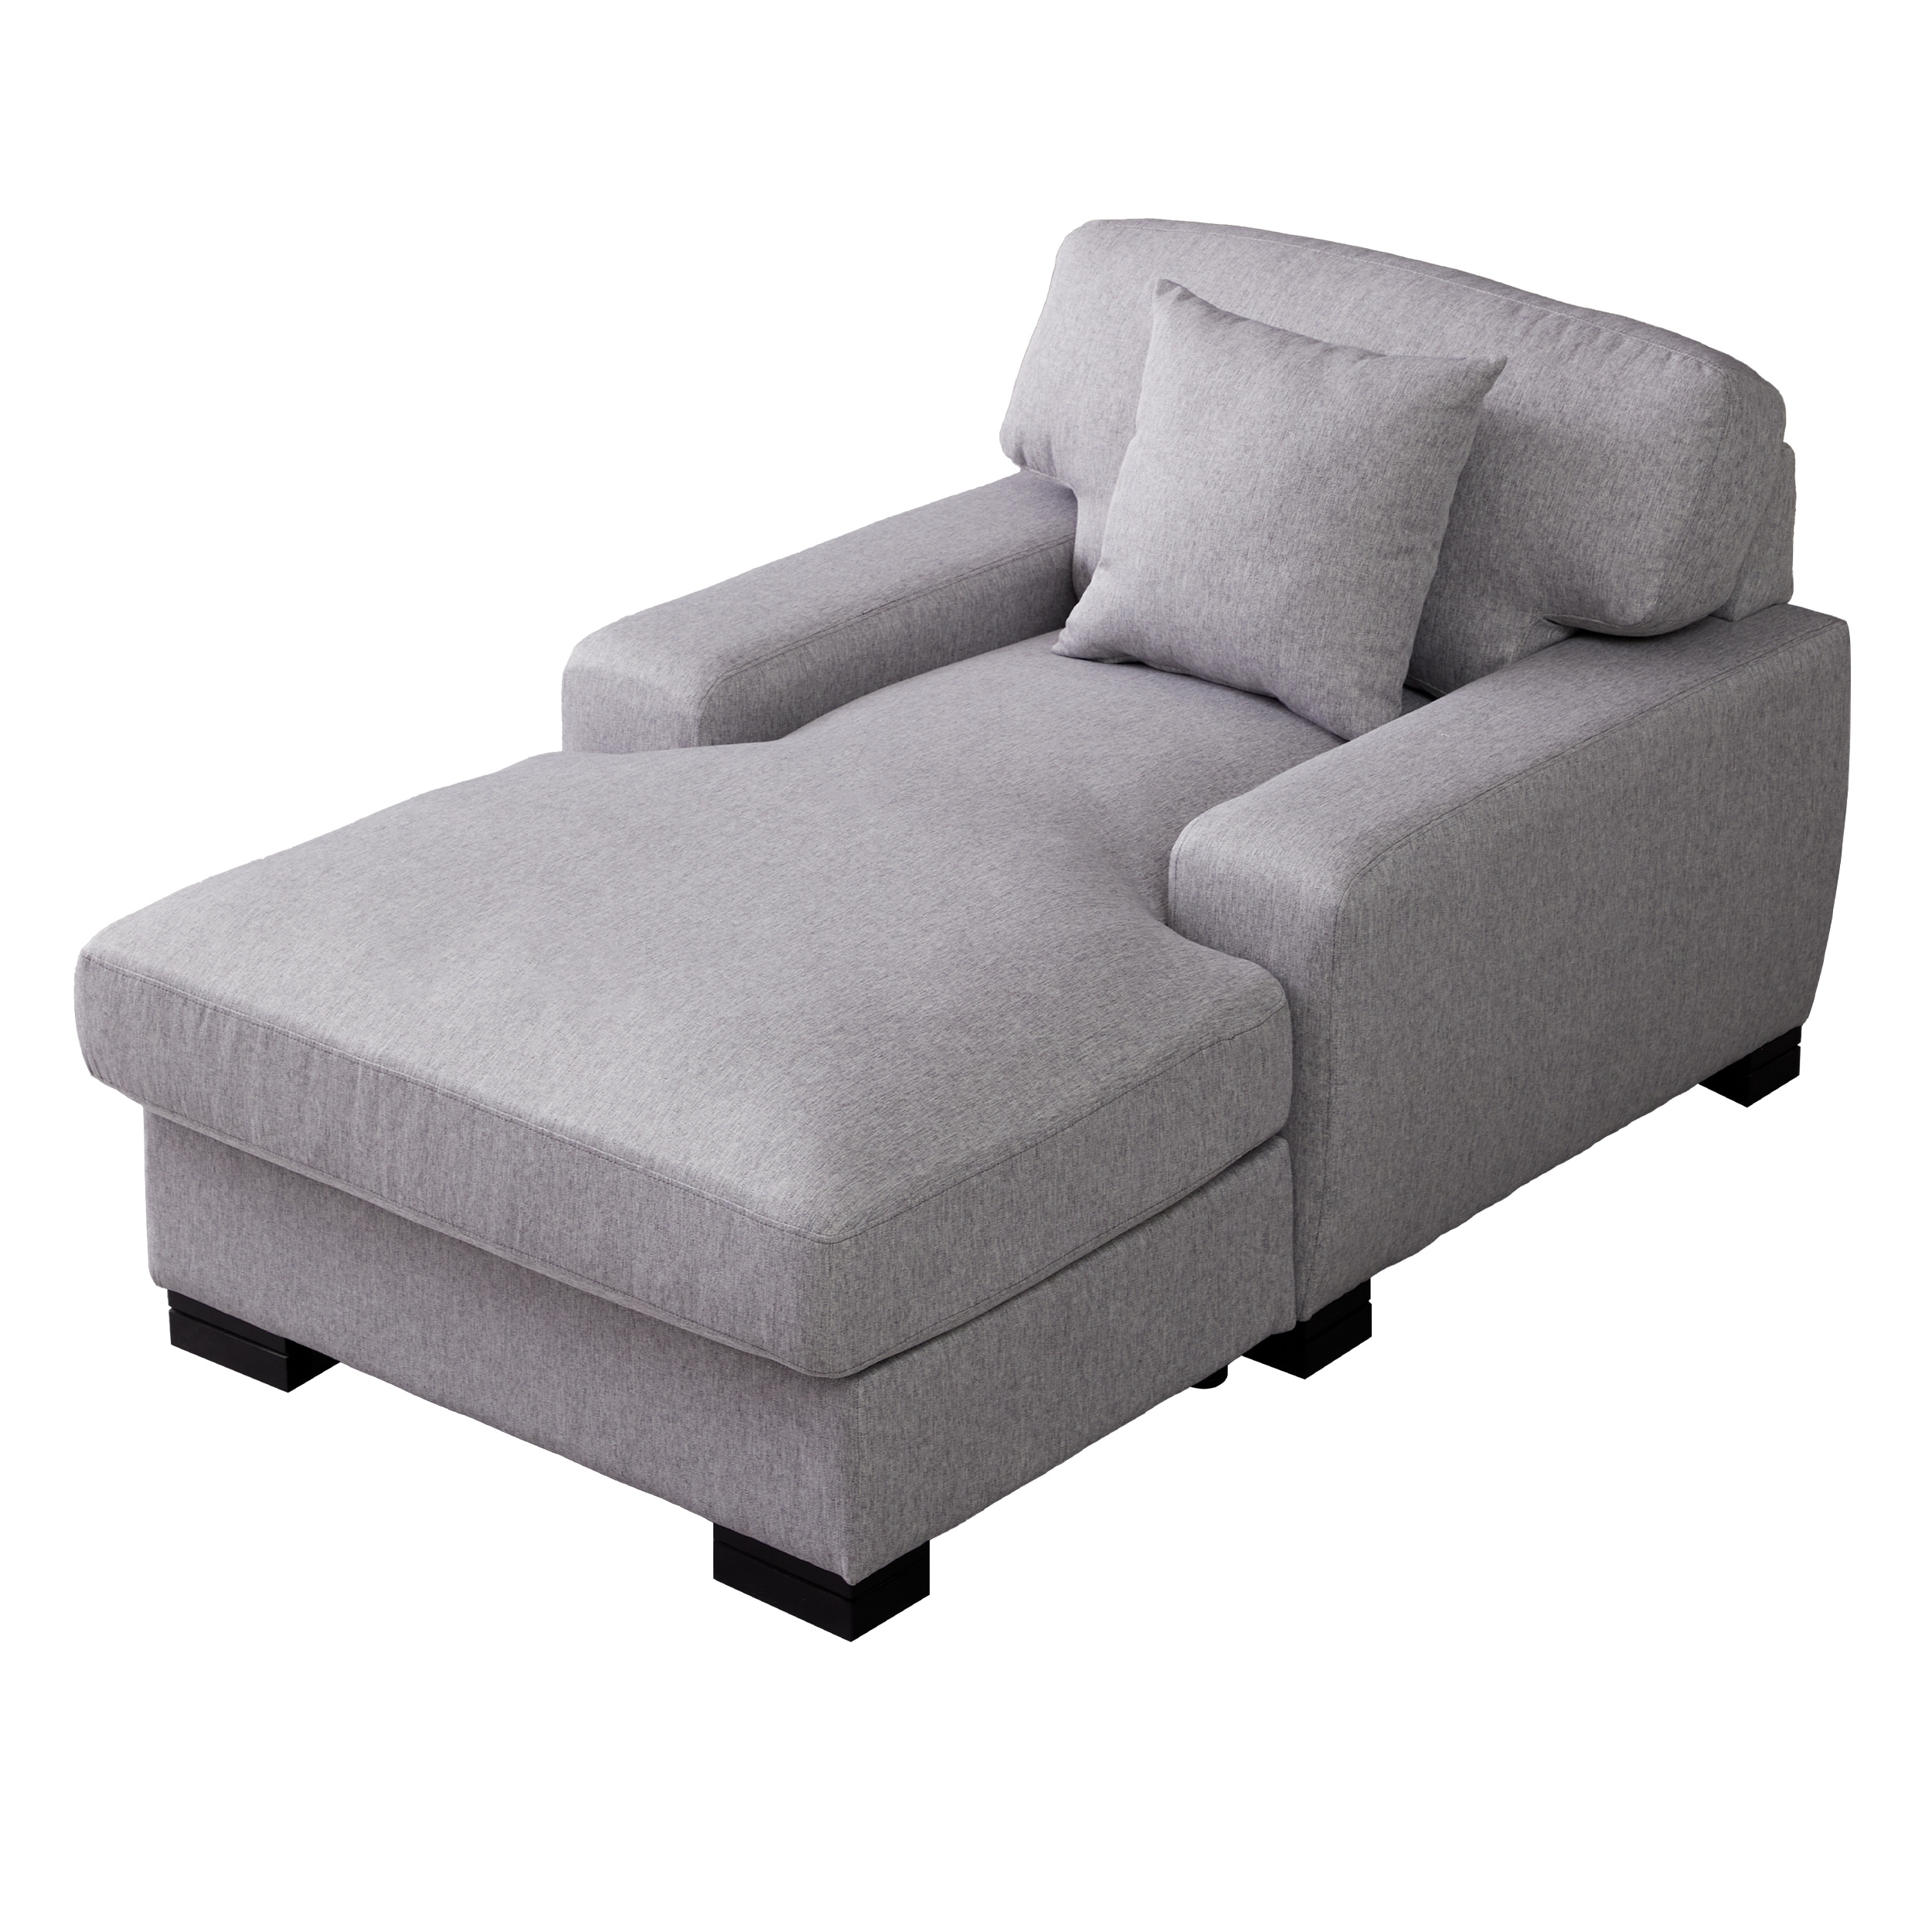 Velvet Oversized Chaise Lounger Comfort Sleeper Sofa with Pillow for  Livingroom Modern Square Arms Chair Bed w/Soild Wood Legs